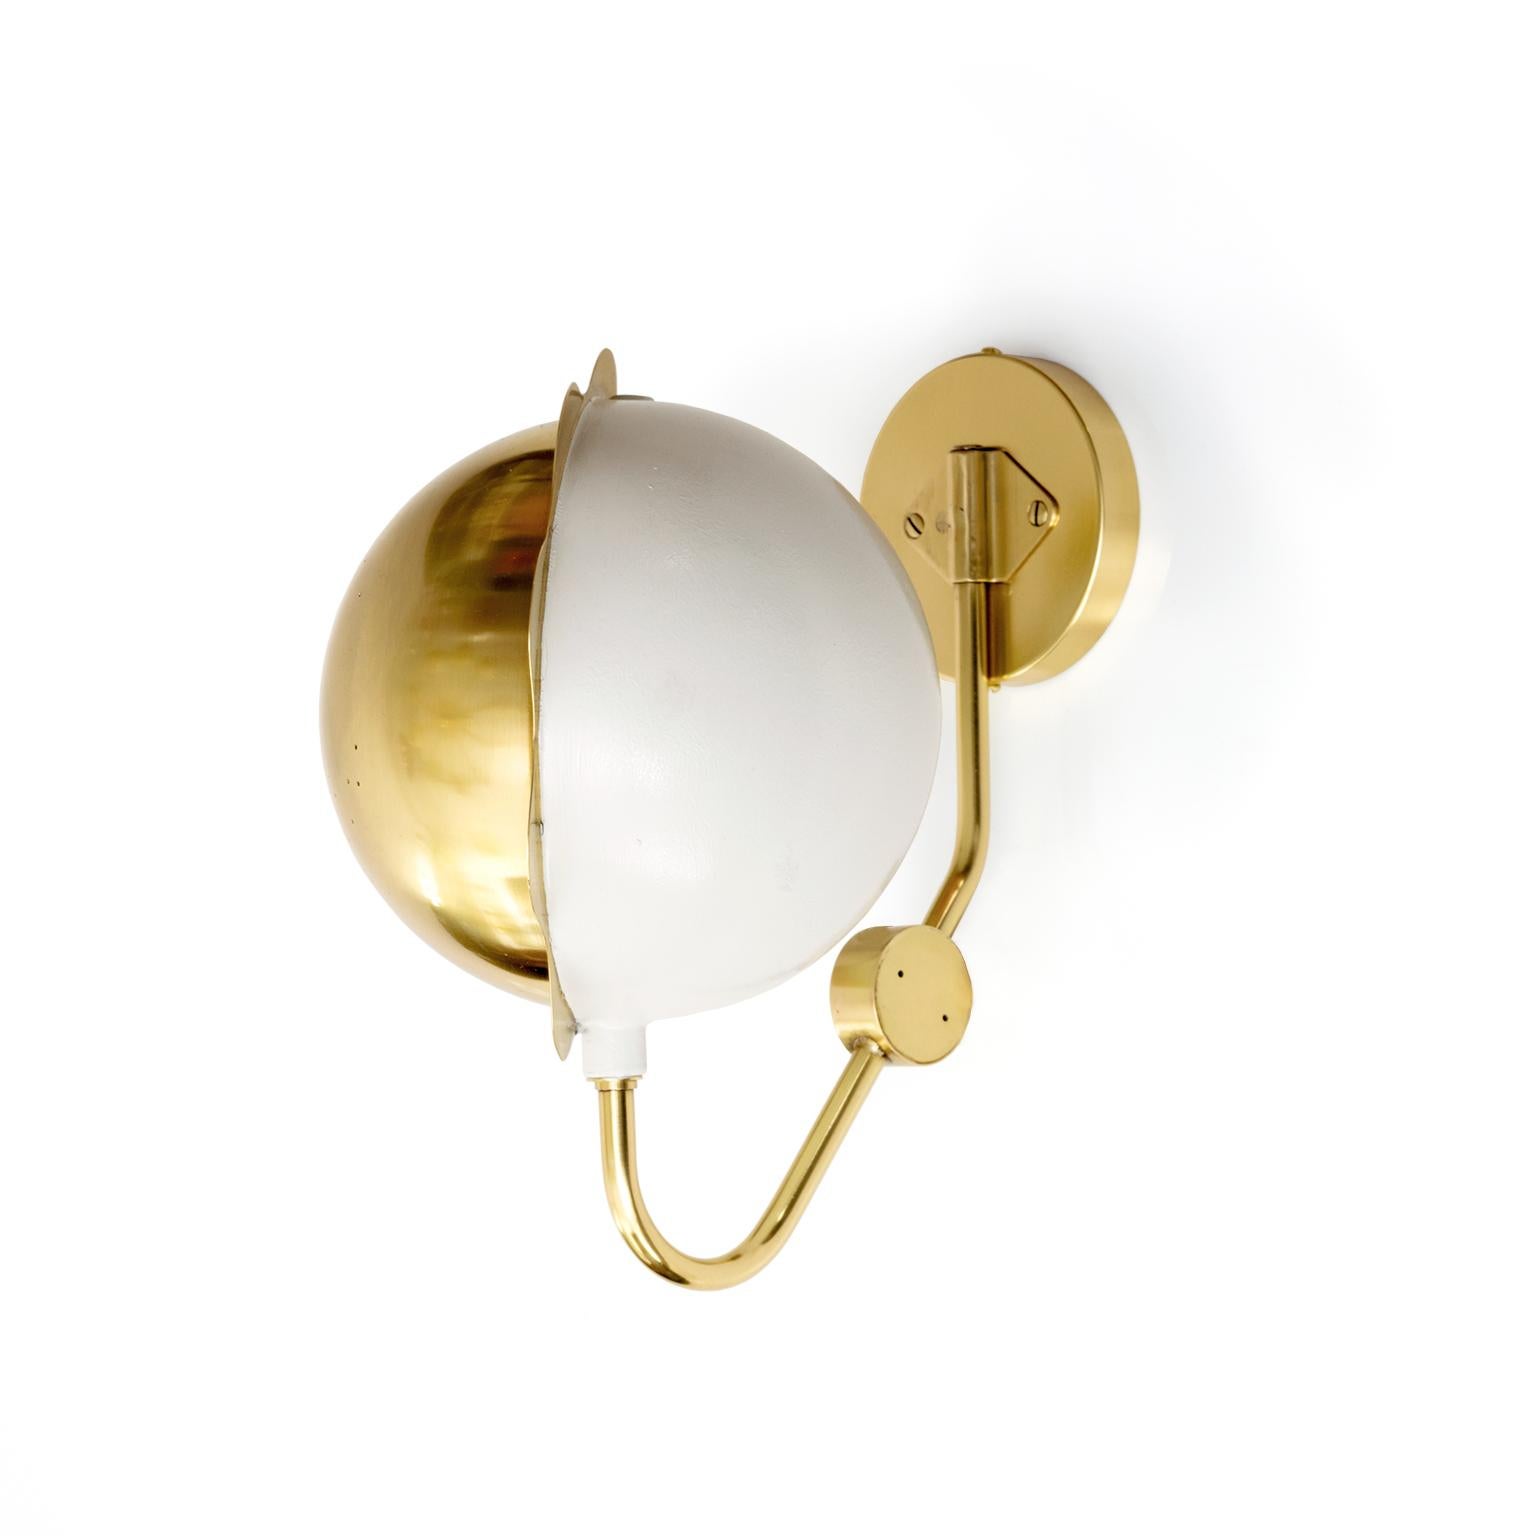 Edvard Hagman Scandinavian Modern Eclipse Sconces, Polished Brass White Lacquer 2